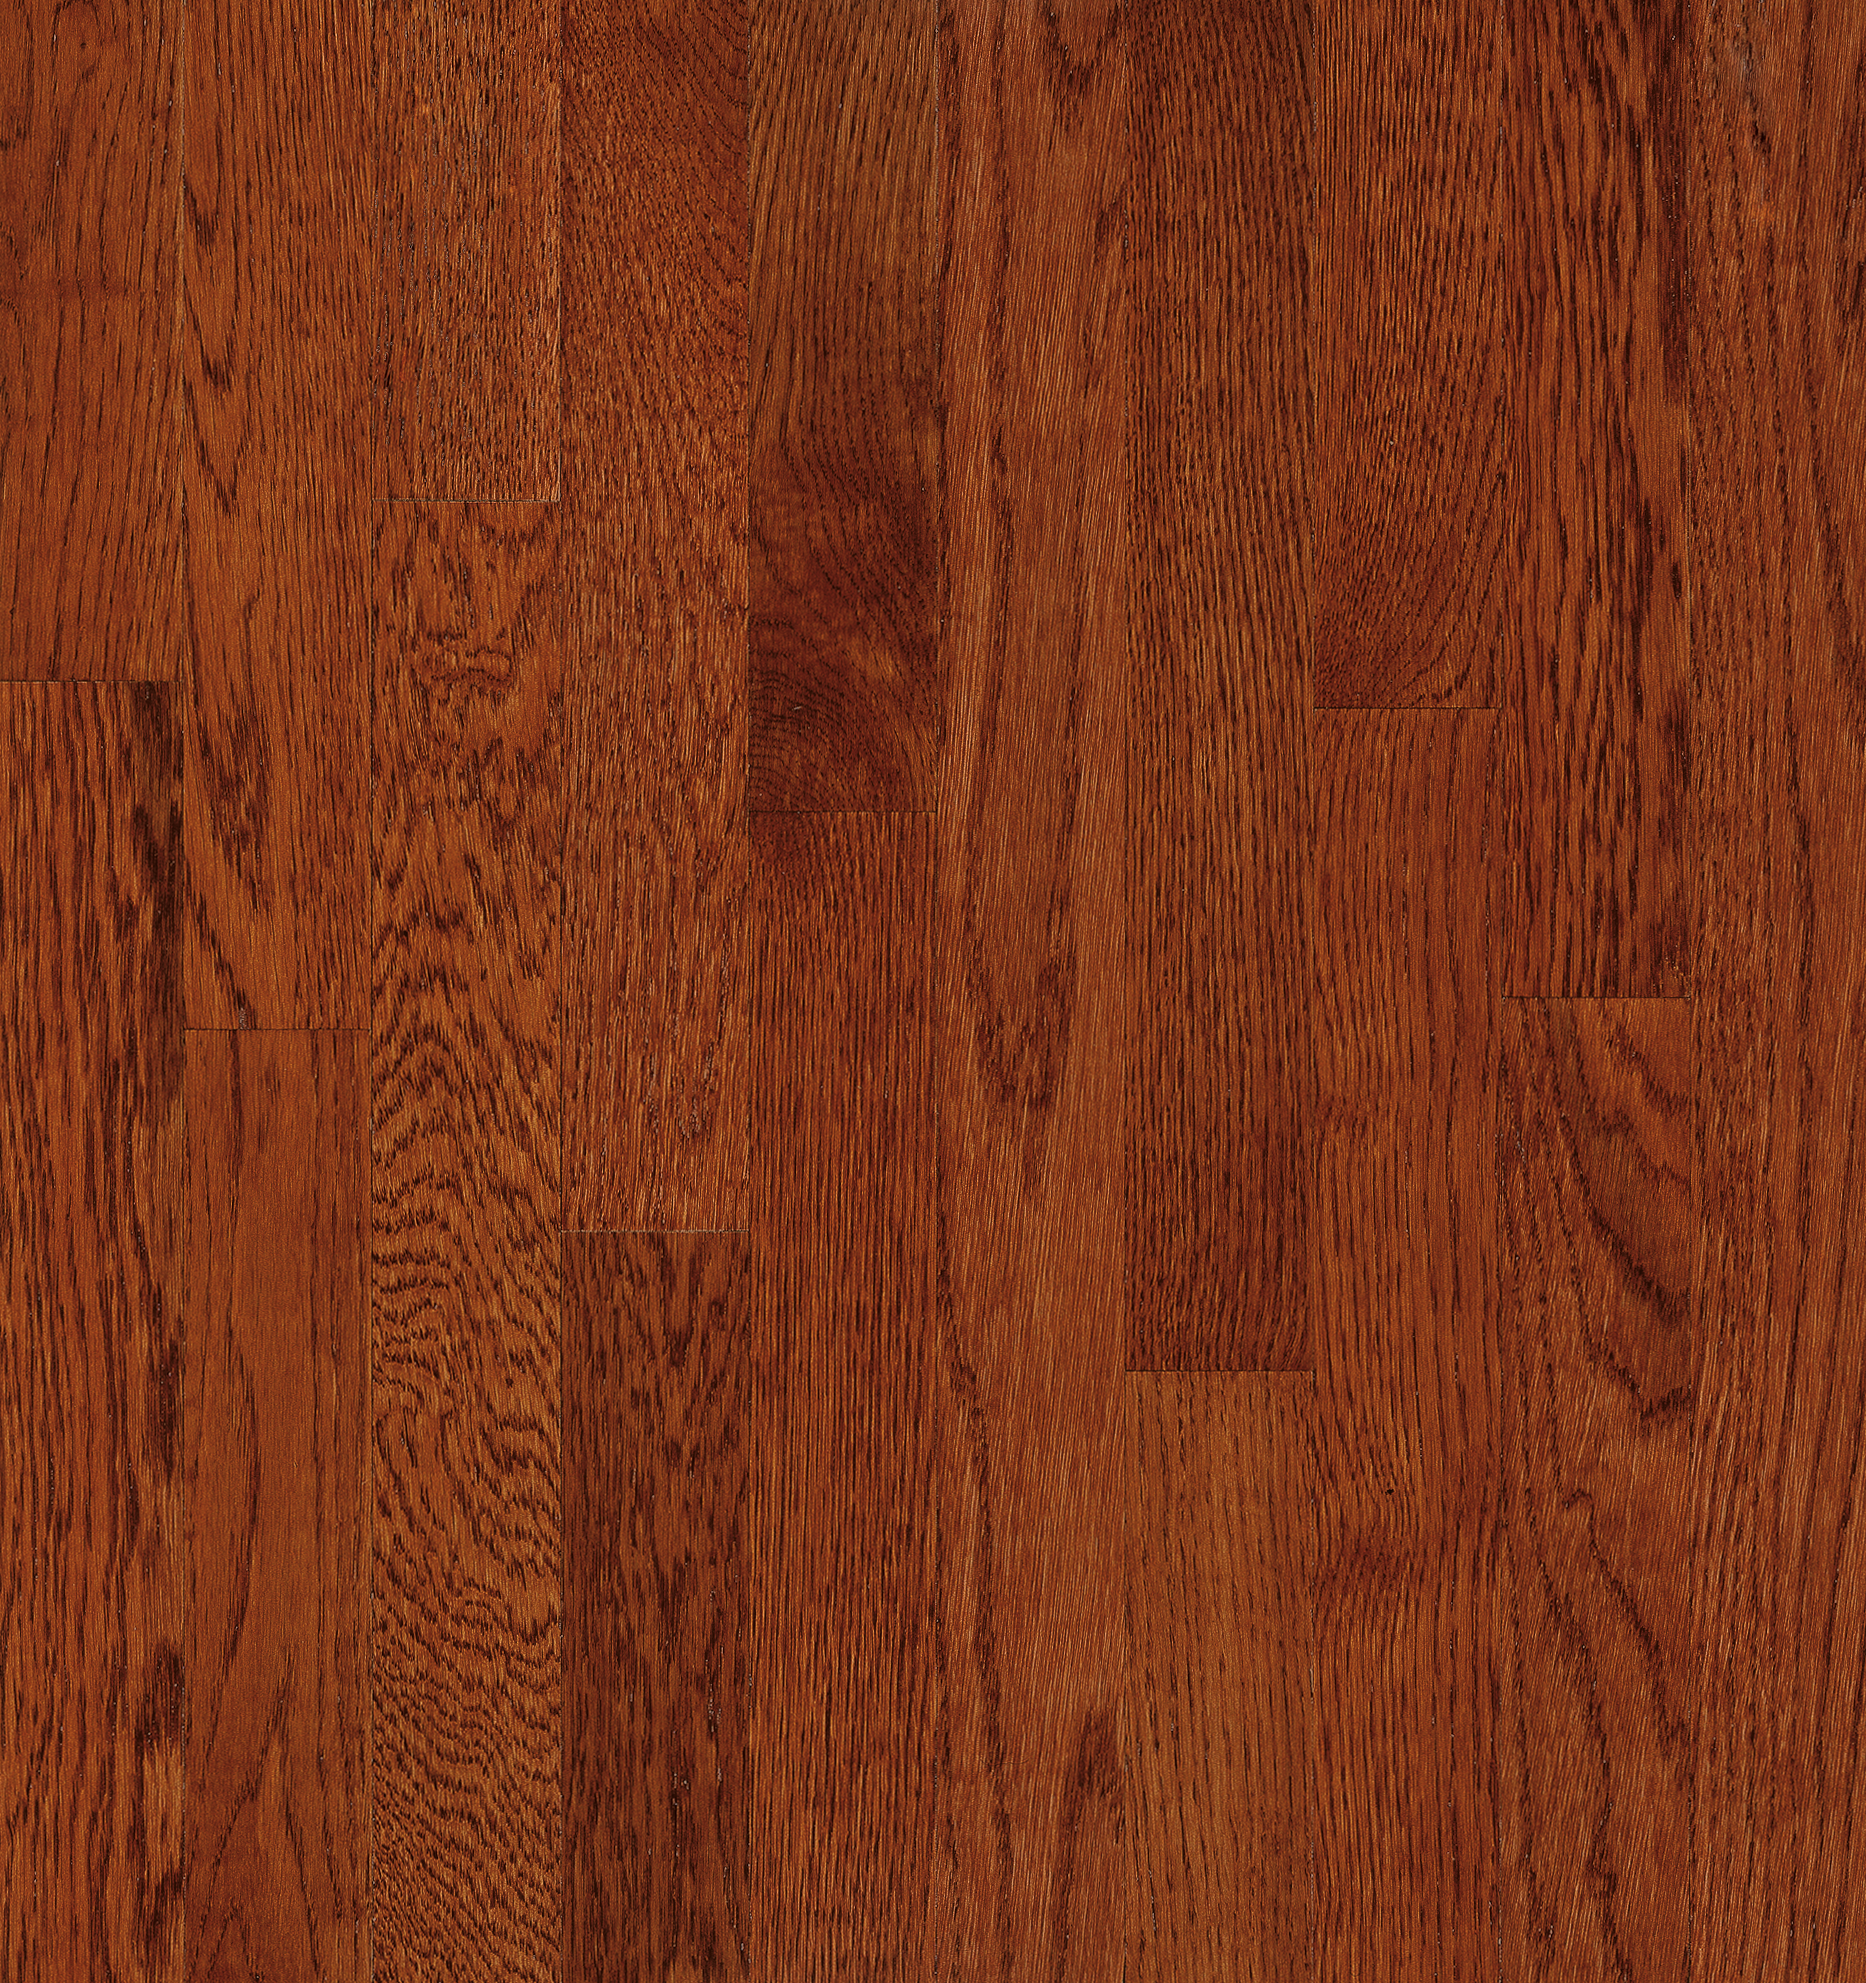 Oak Solid Hardwood C5060, Amber Hardwood Floors